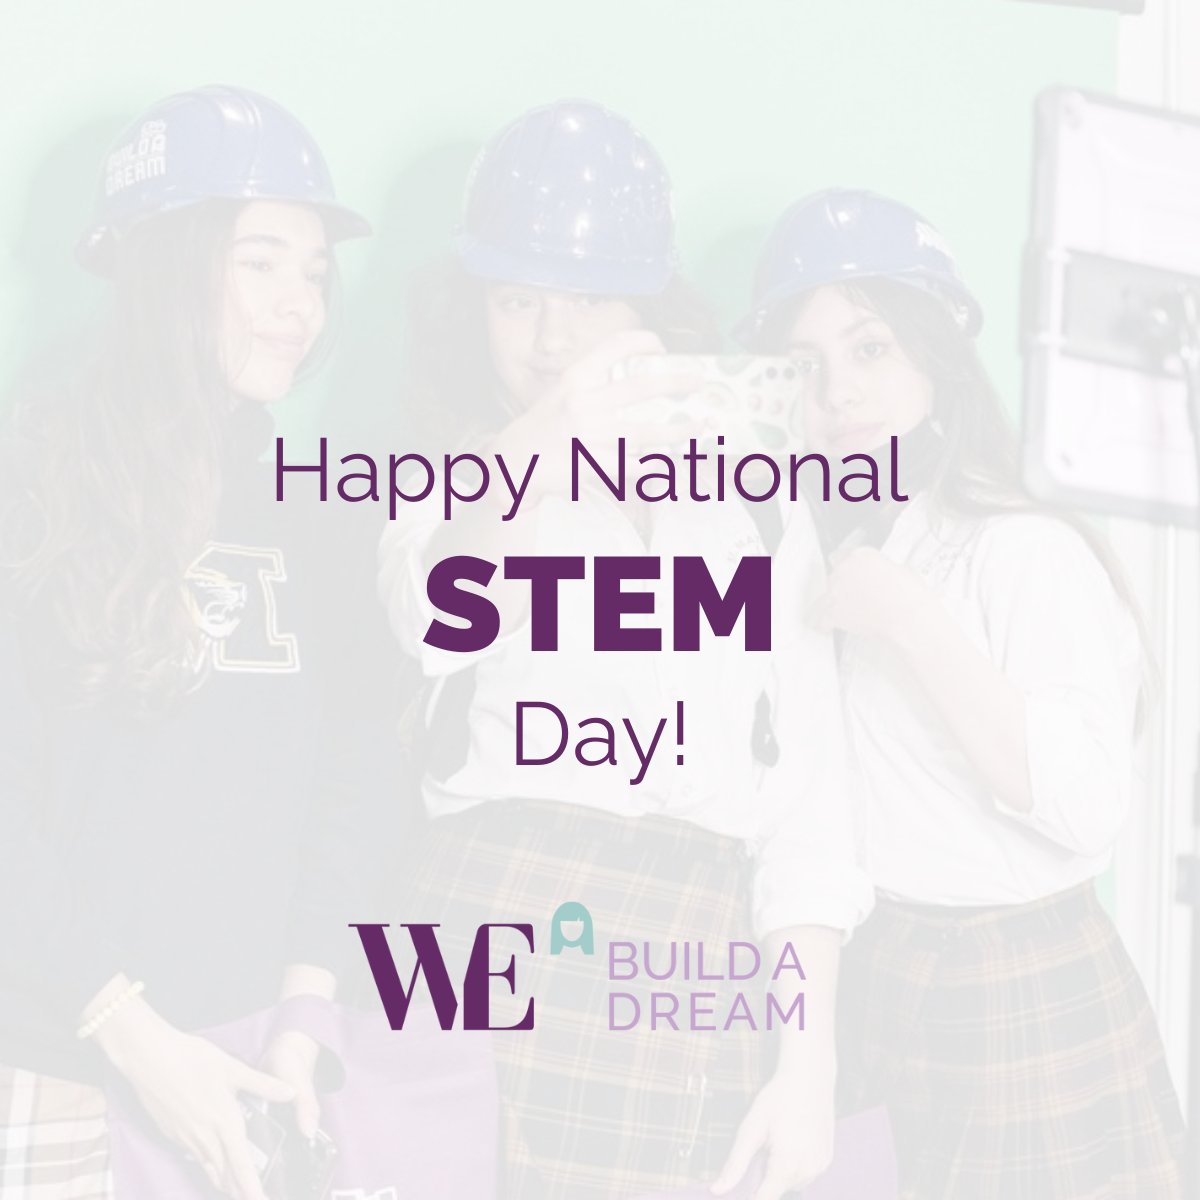 Happy National STEM Day! 💜

#STEM #STEAM #WEBuildADream #BuildADream #WomenInSTEM #WomenInSTEAM